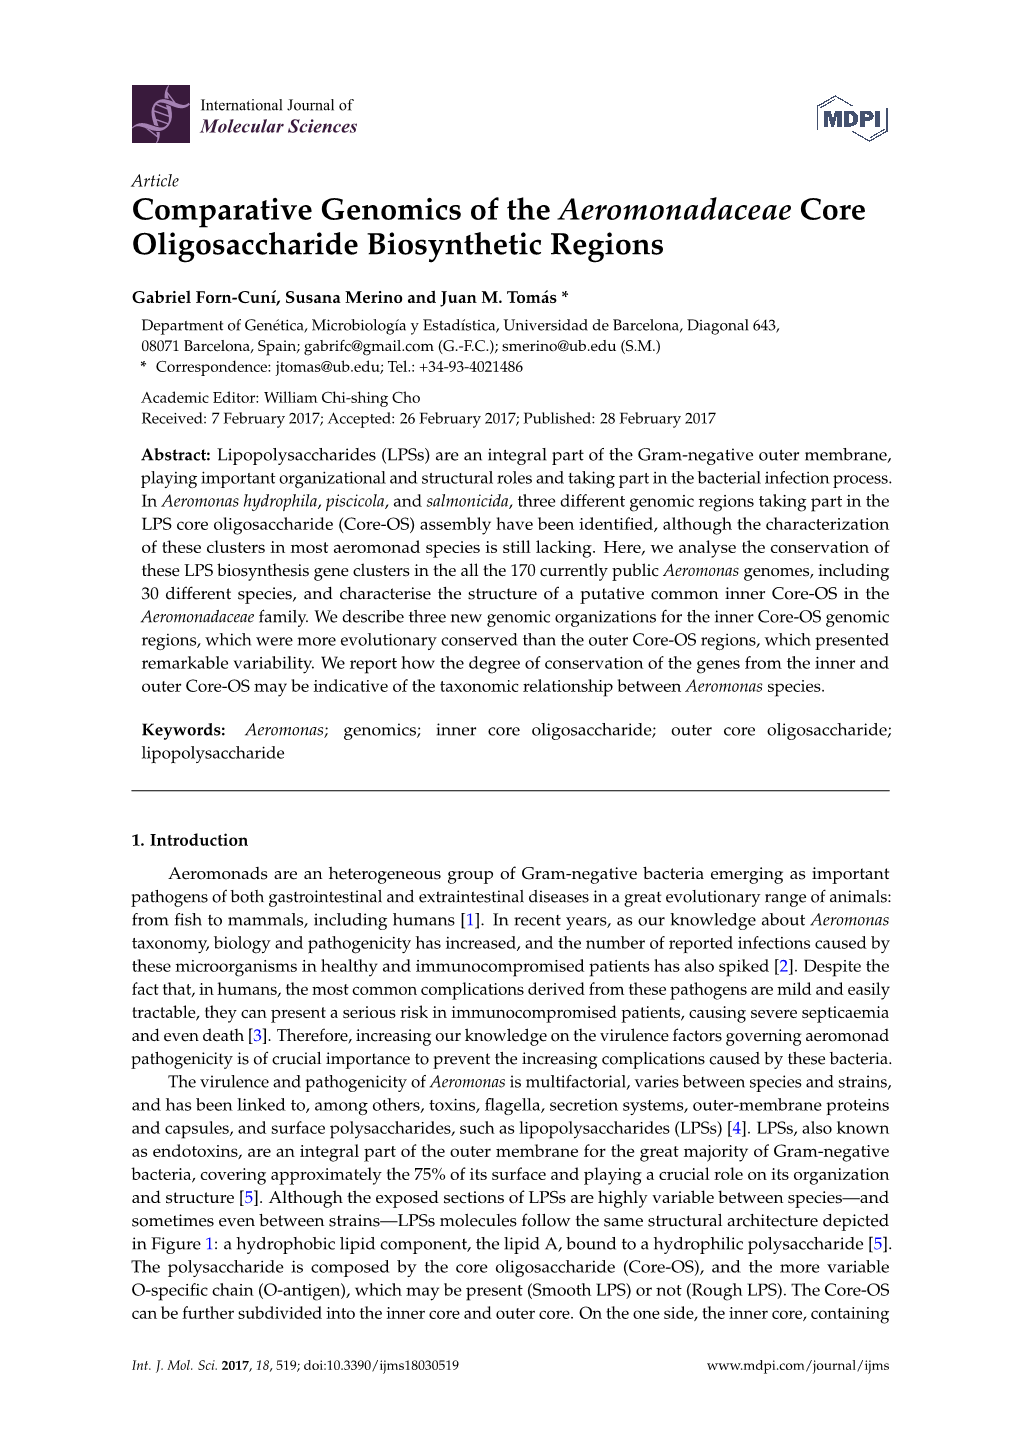 Comparative Genomics of the Aeromonadaceae Core Oligosaccharide Biosynthetic Regions